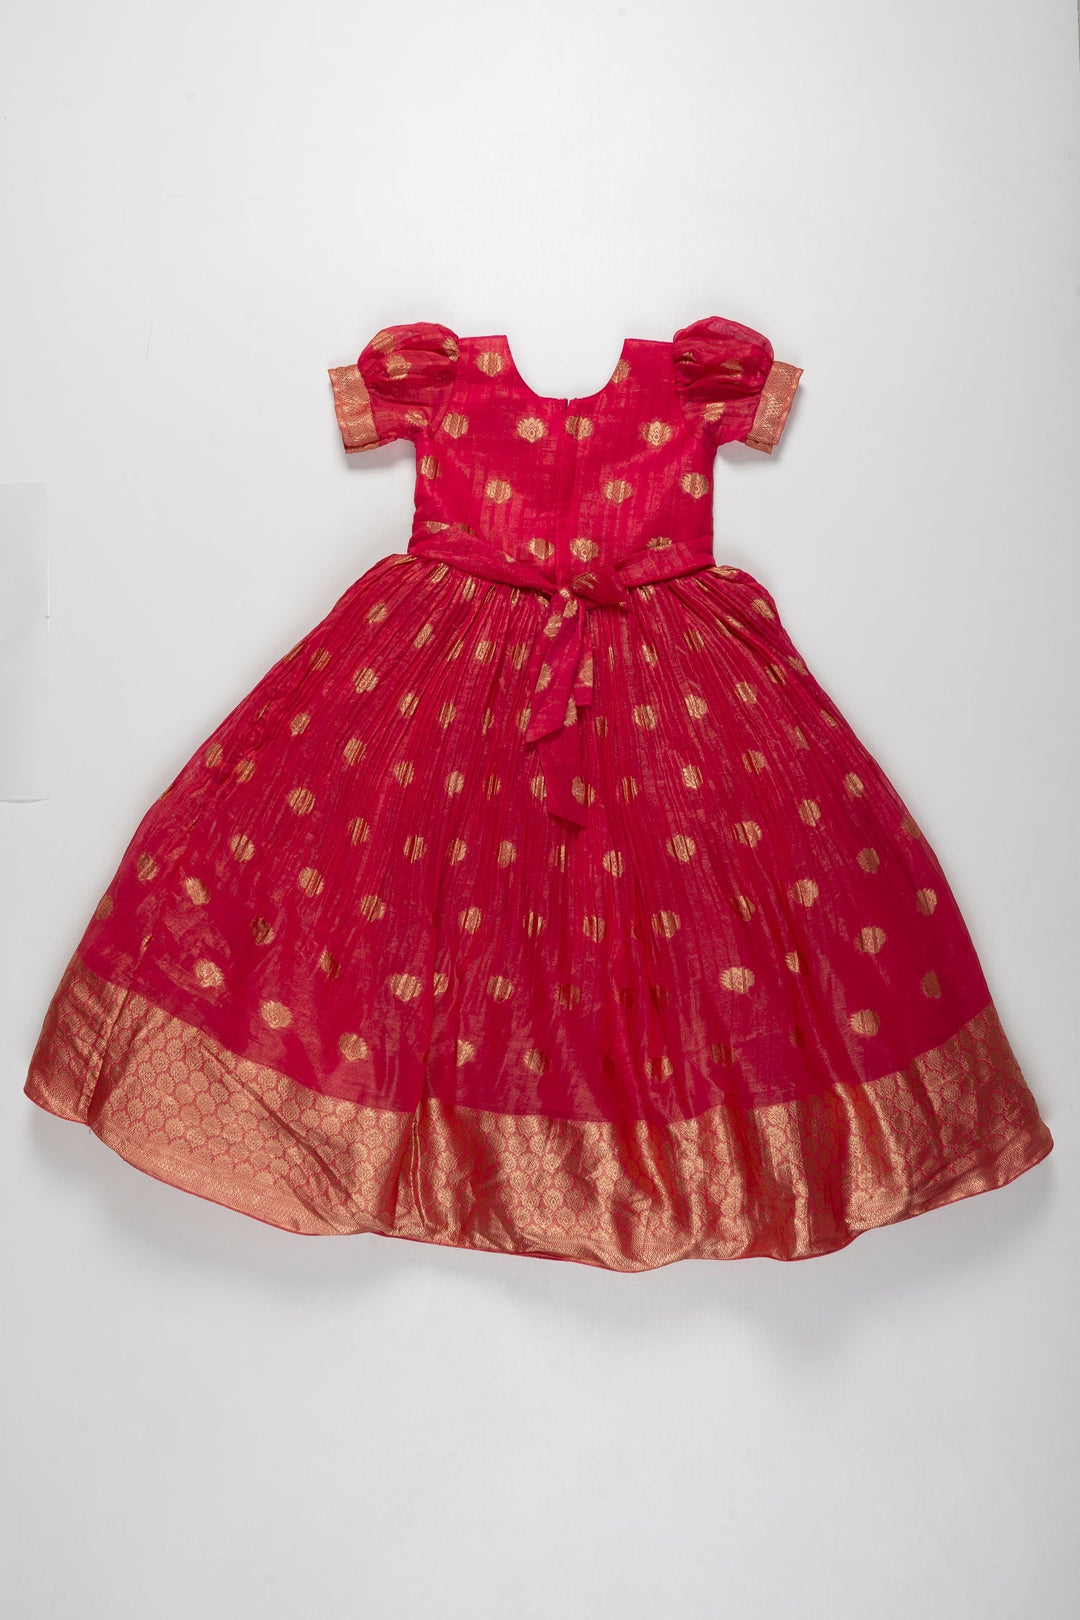 The Nesavu Girls Silk Gown Ruby Radiance: Festive Anarkali Gown for Girls Nesavu Girls Pink Silk Anarkali Gown | Luxurious Festive Wear | The Nesavu